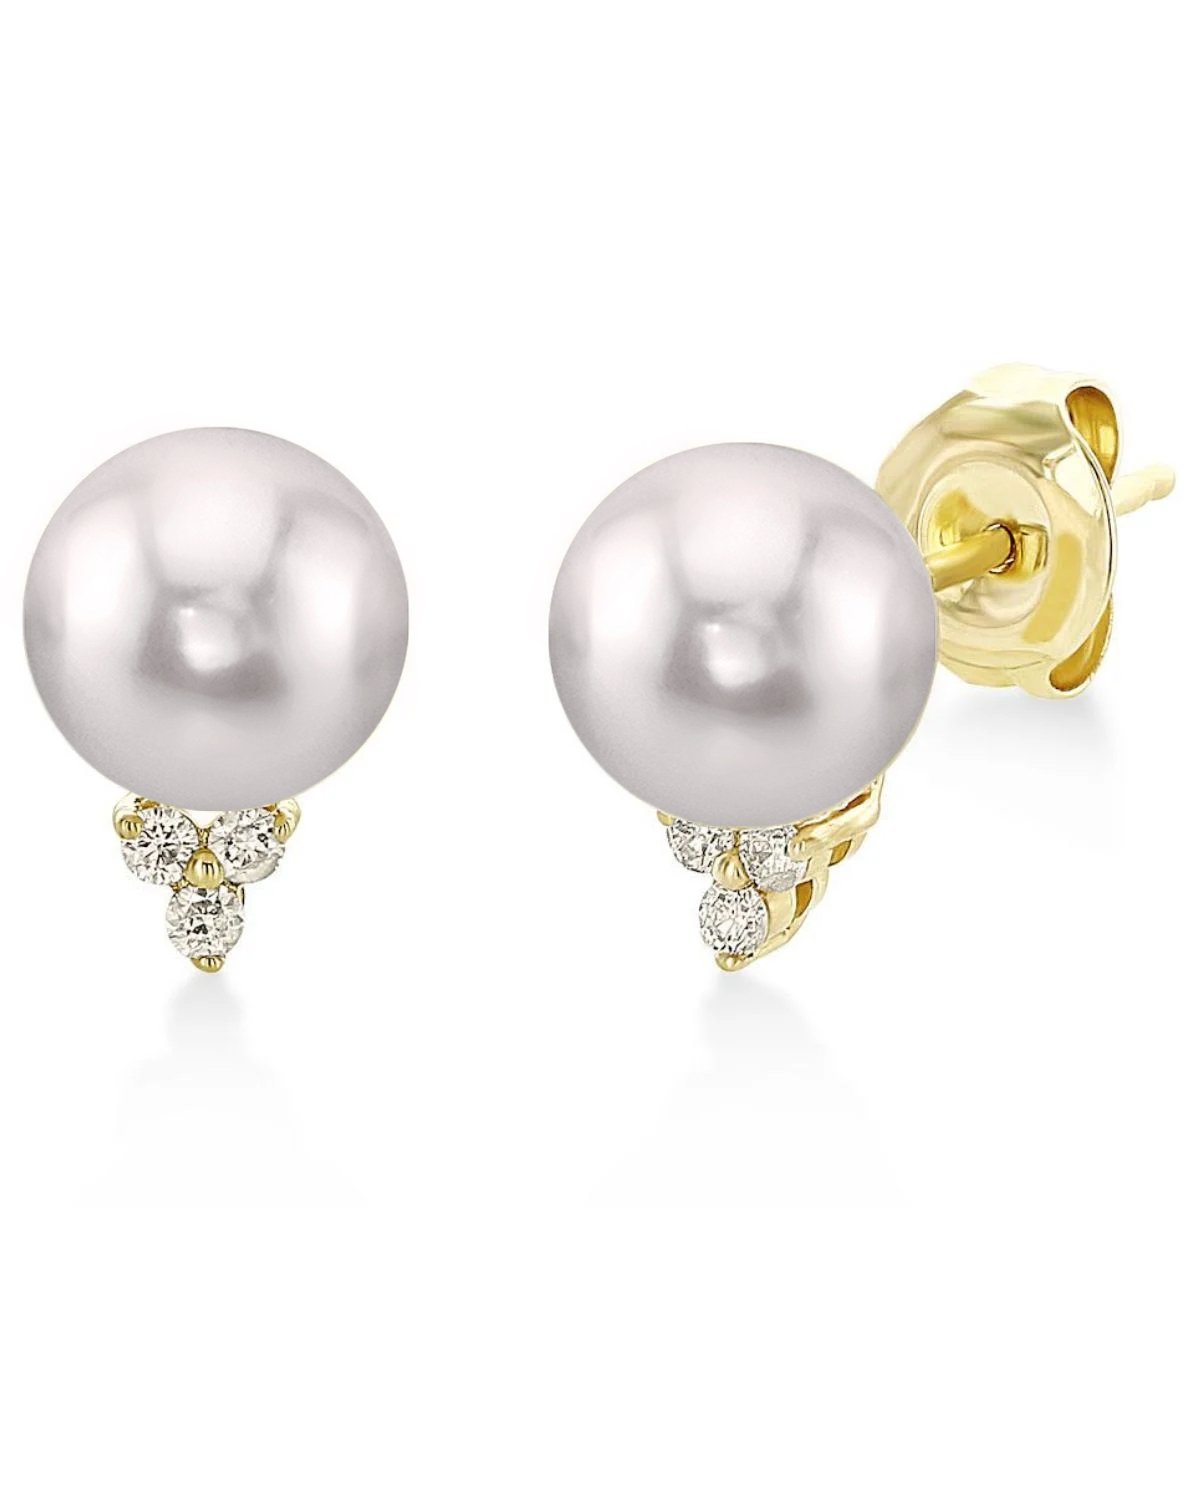 14K White or Yellow Gold Akoya Pearl Stud Earrings 14K Yellow Gold / 5.0-5.5mm